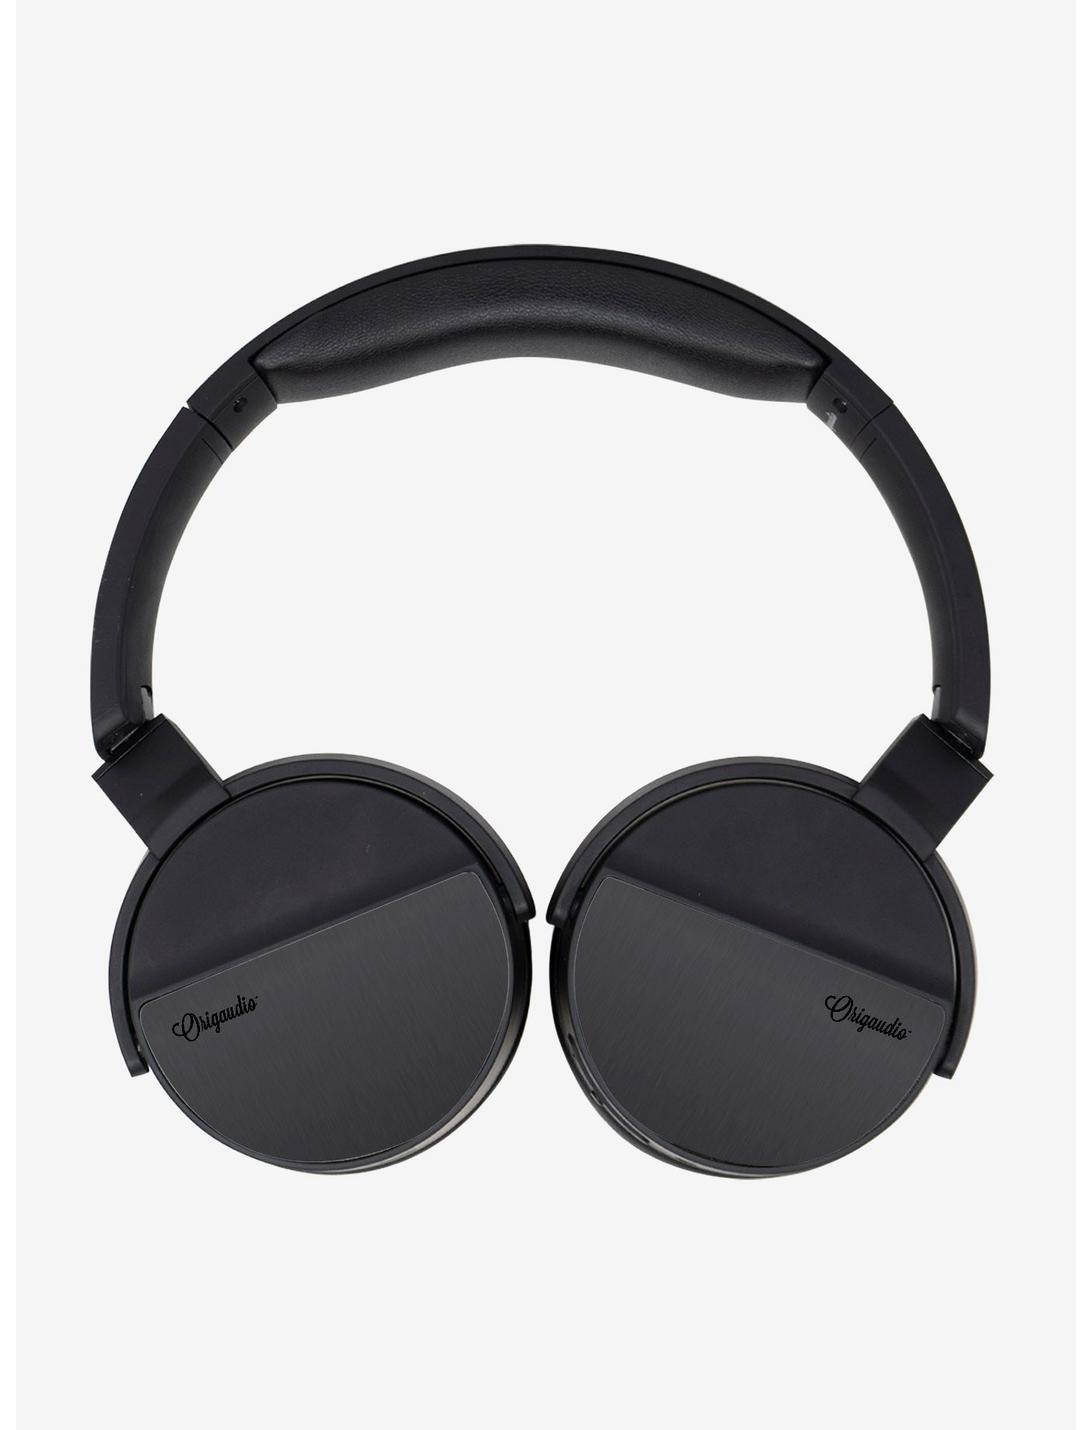 LunaTunes Black Wireless Headphones, , hi-res